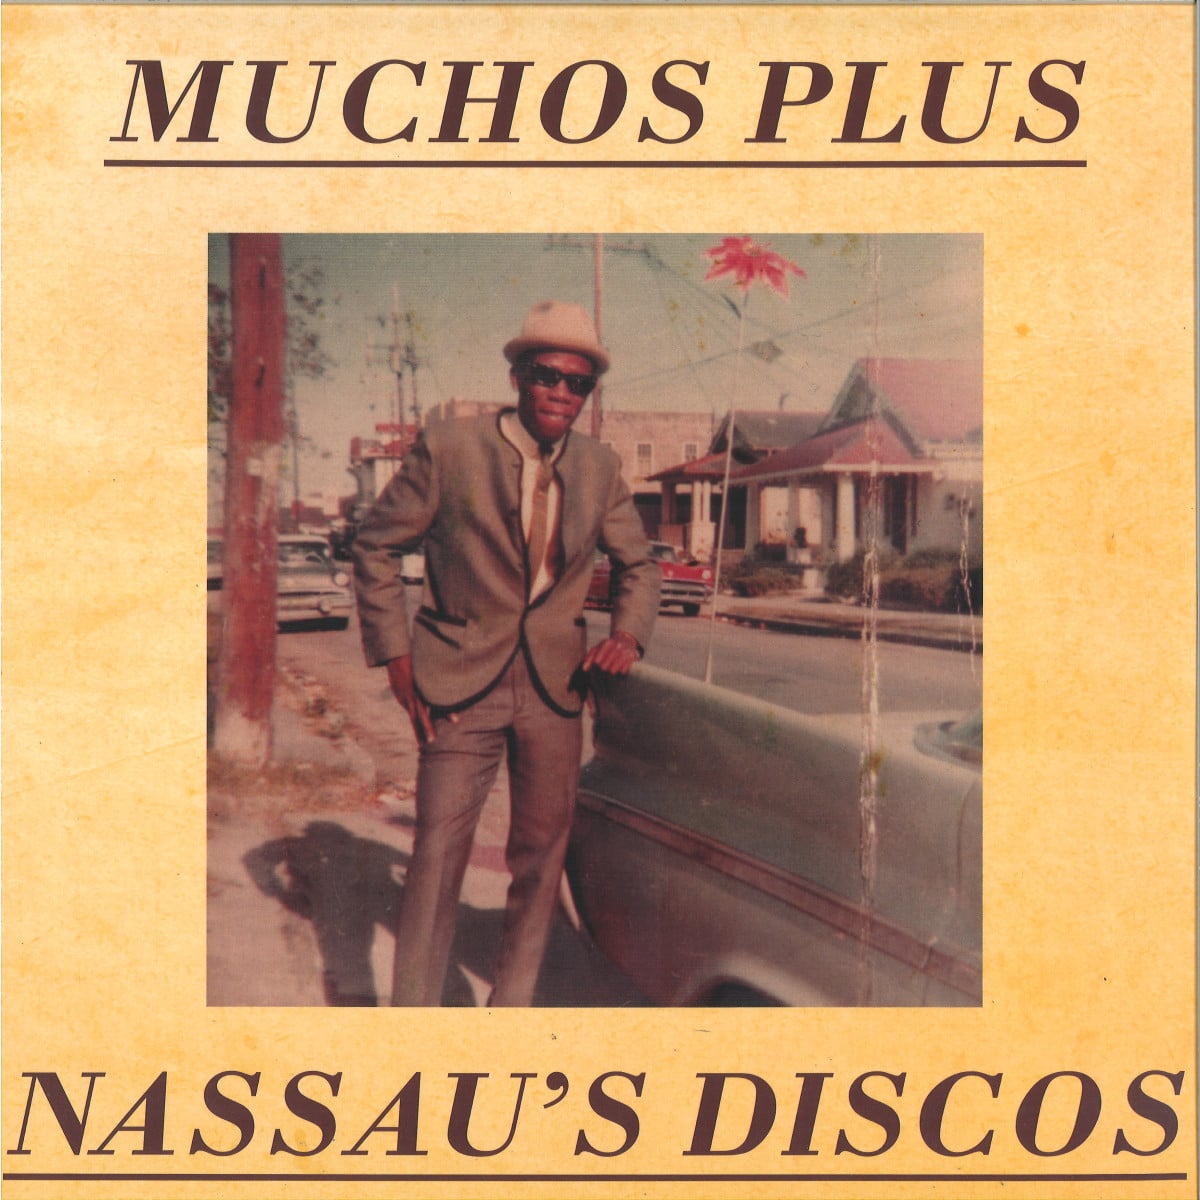 Muchos Plus - Nassau's Discos - KALITA12015 - KALITA